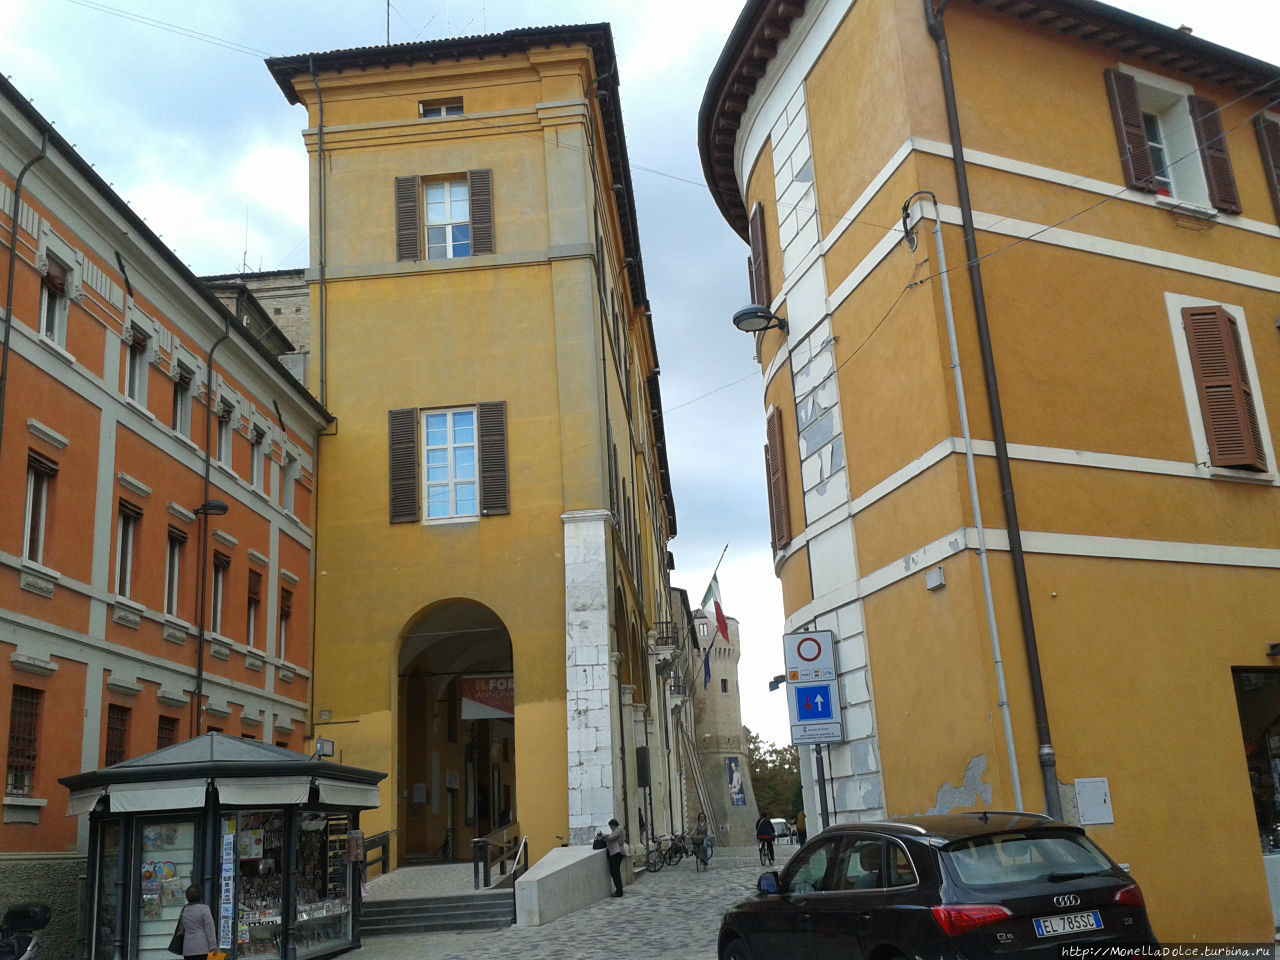 Чесена — особенности архитектуры Чезена, Италия